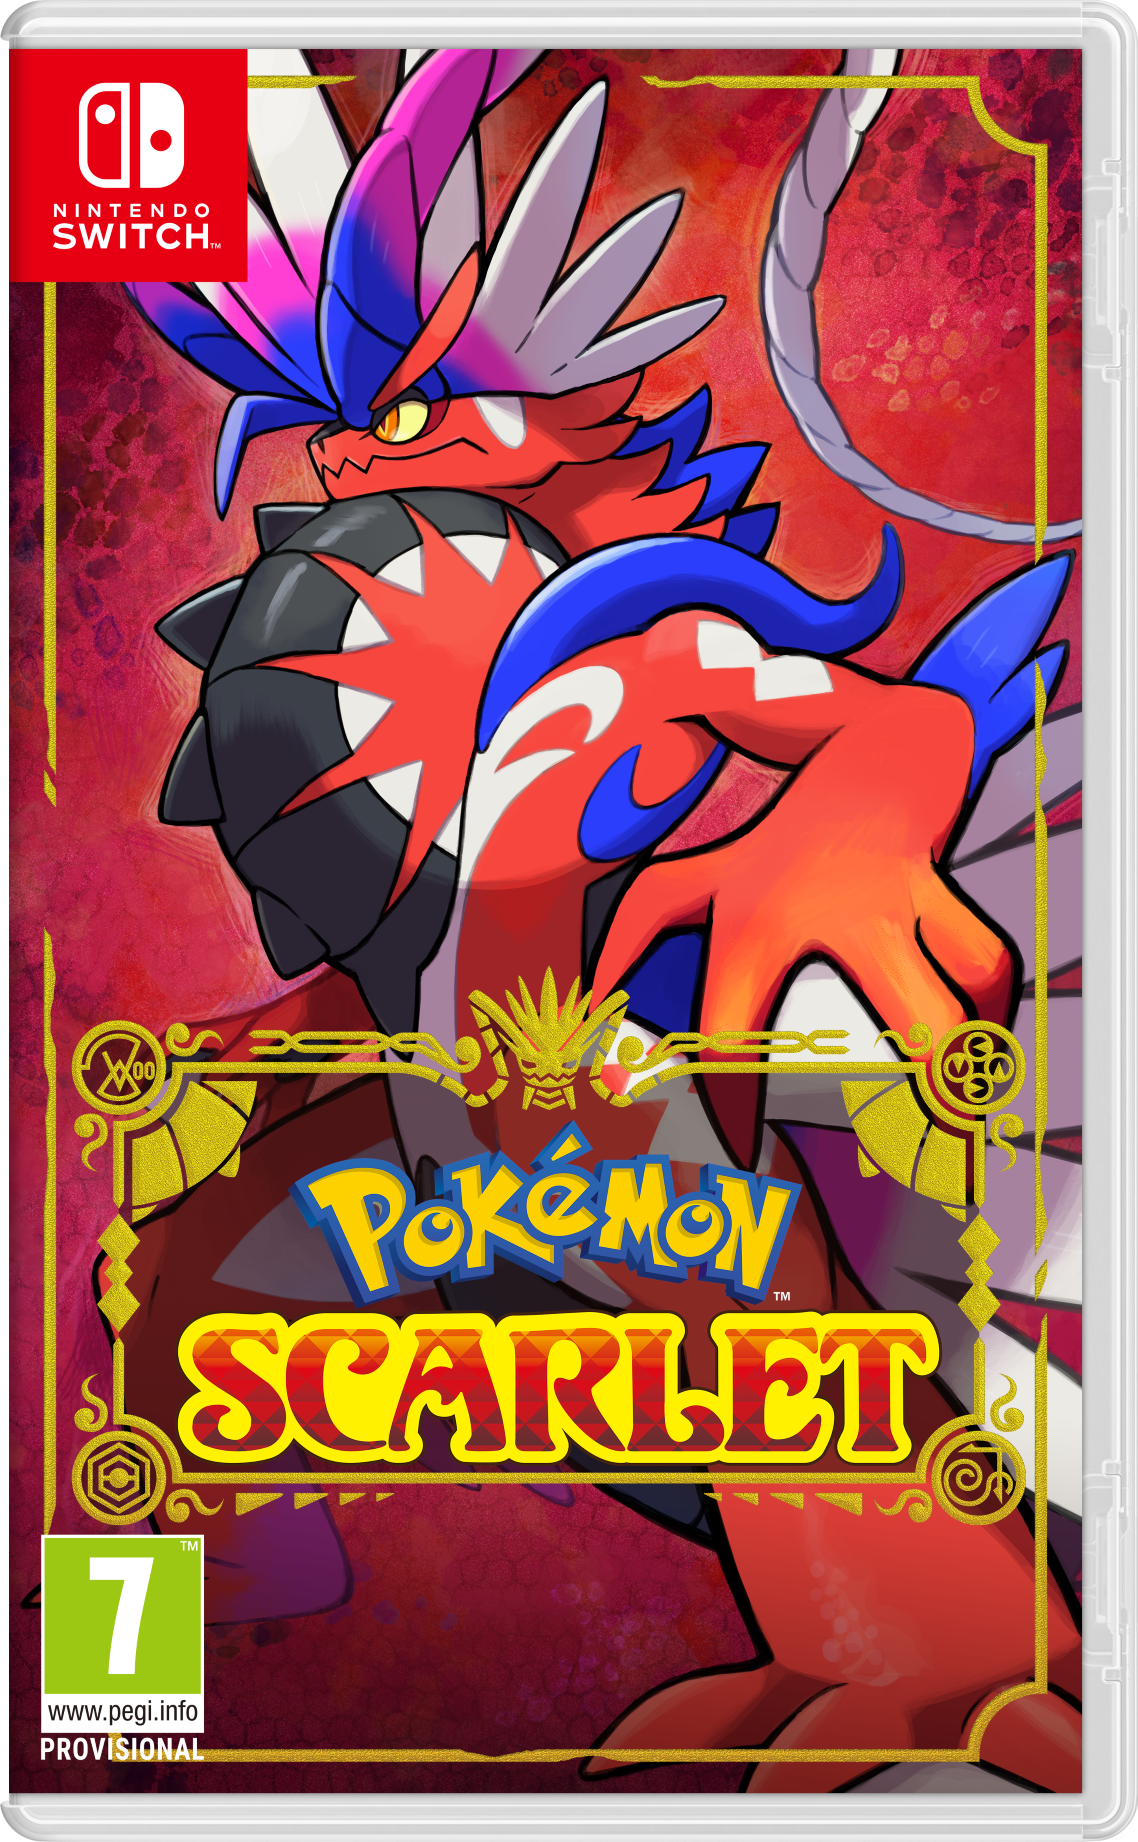 Pokémon Scarlet with exclusive pre-order bonus (NS)